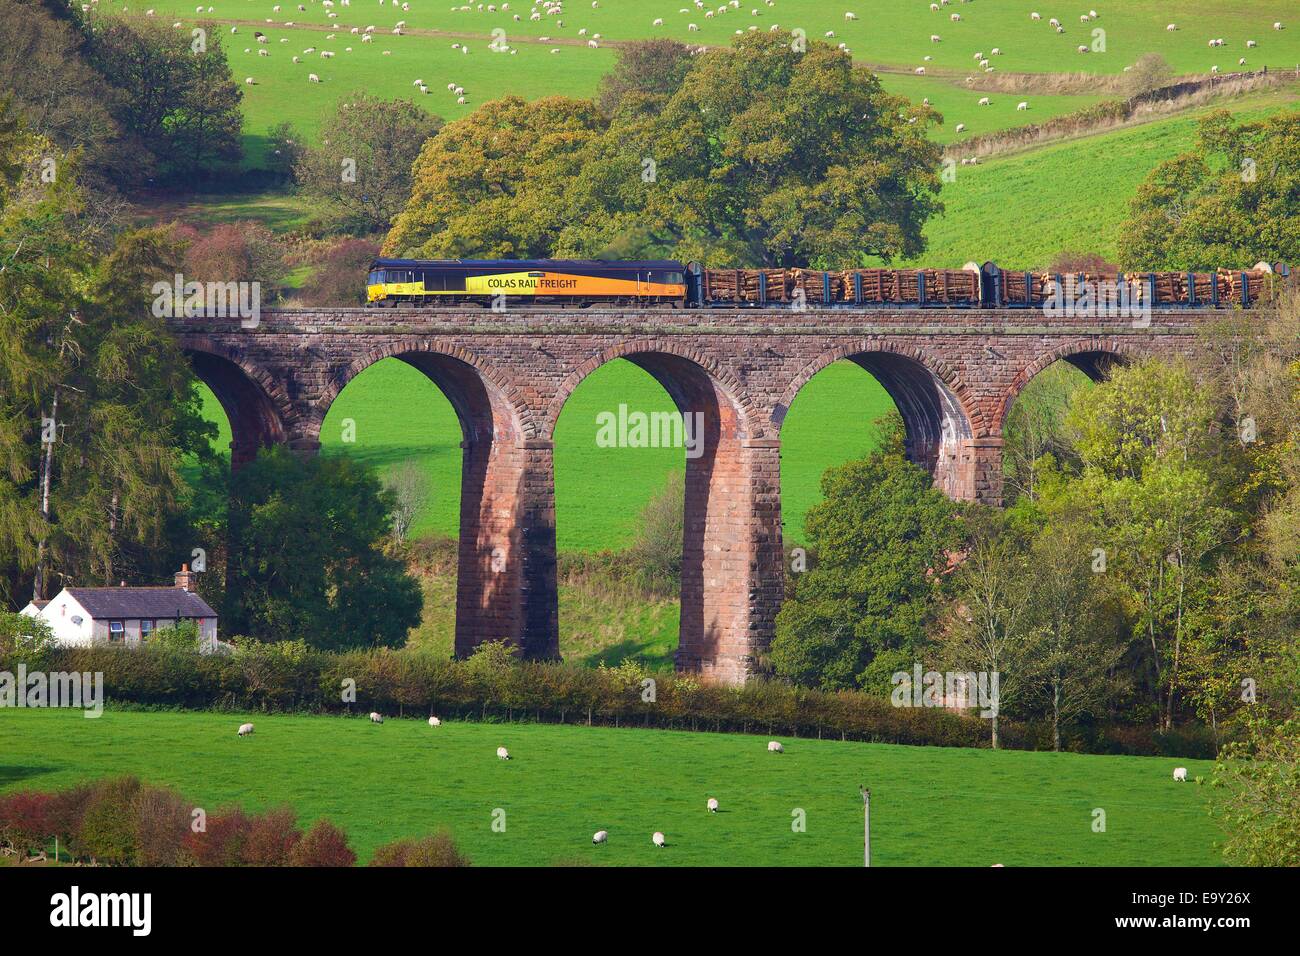 Colas Rail Freight train on Dry Beck Viaduct, Armathwaite, Eden Valley, Cumbria, England, UK. Stock Photo